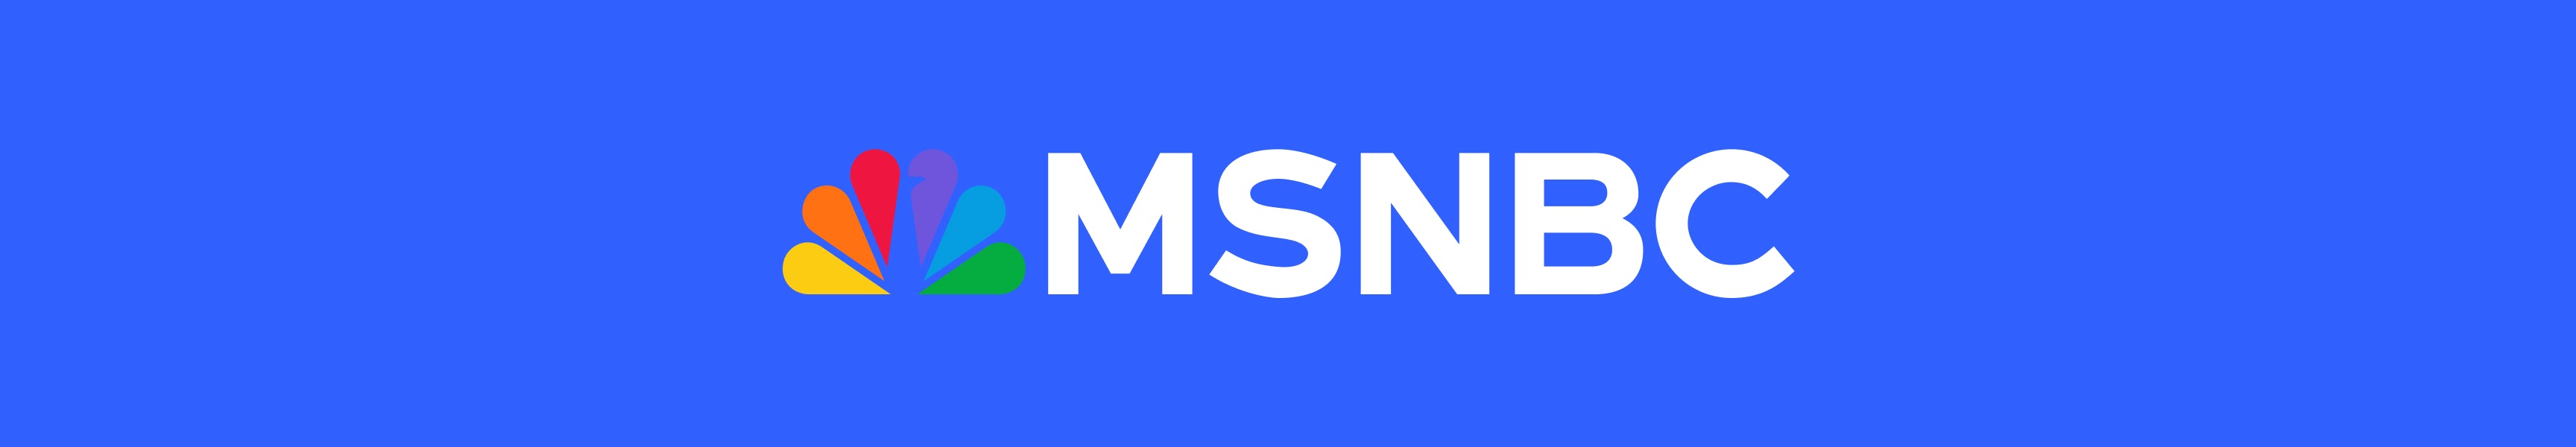 MSNBC Mousepads